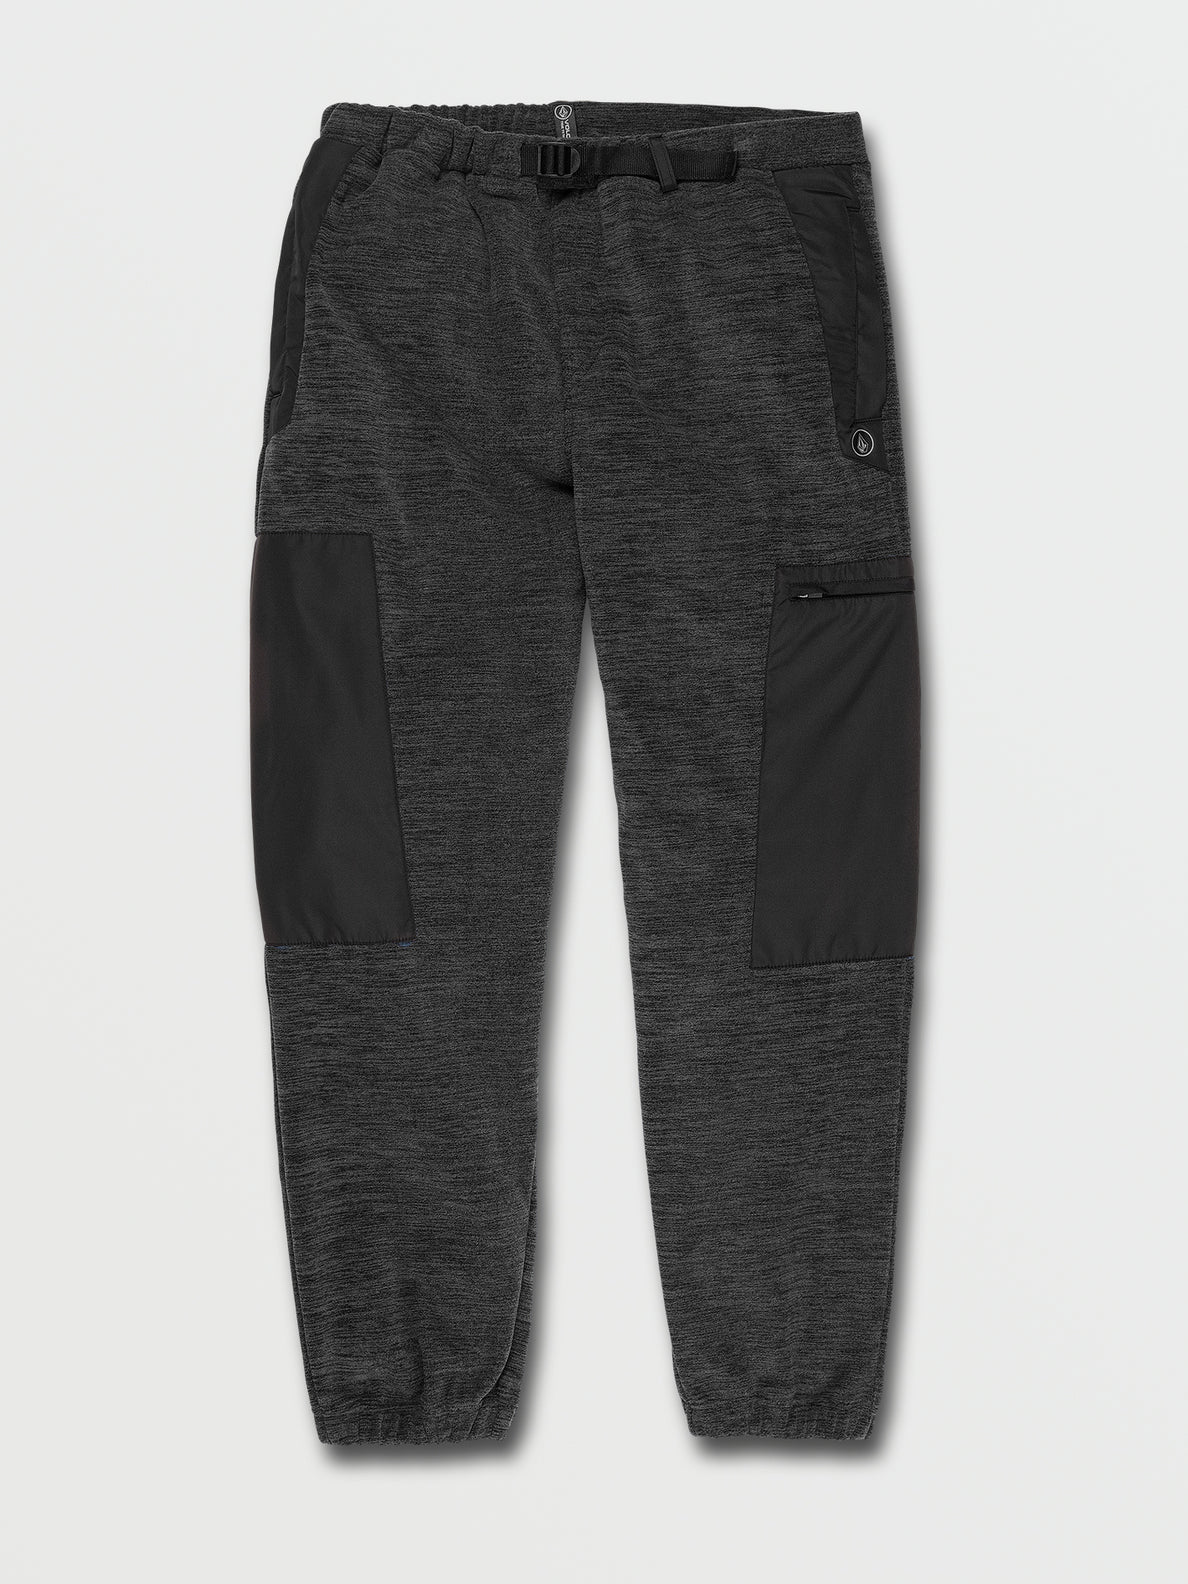 Yzzolater Fleece Pants - Black on Black (A1232209_BKB) [F]